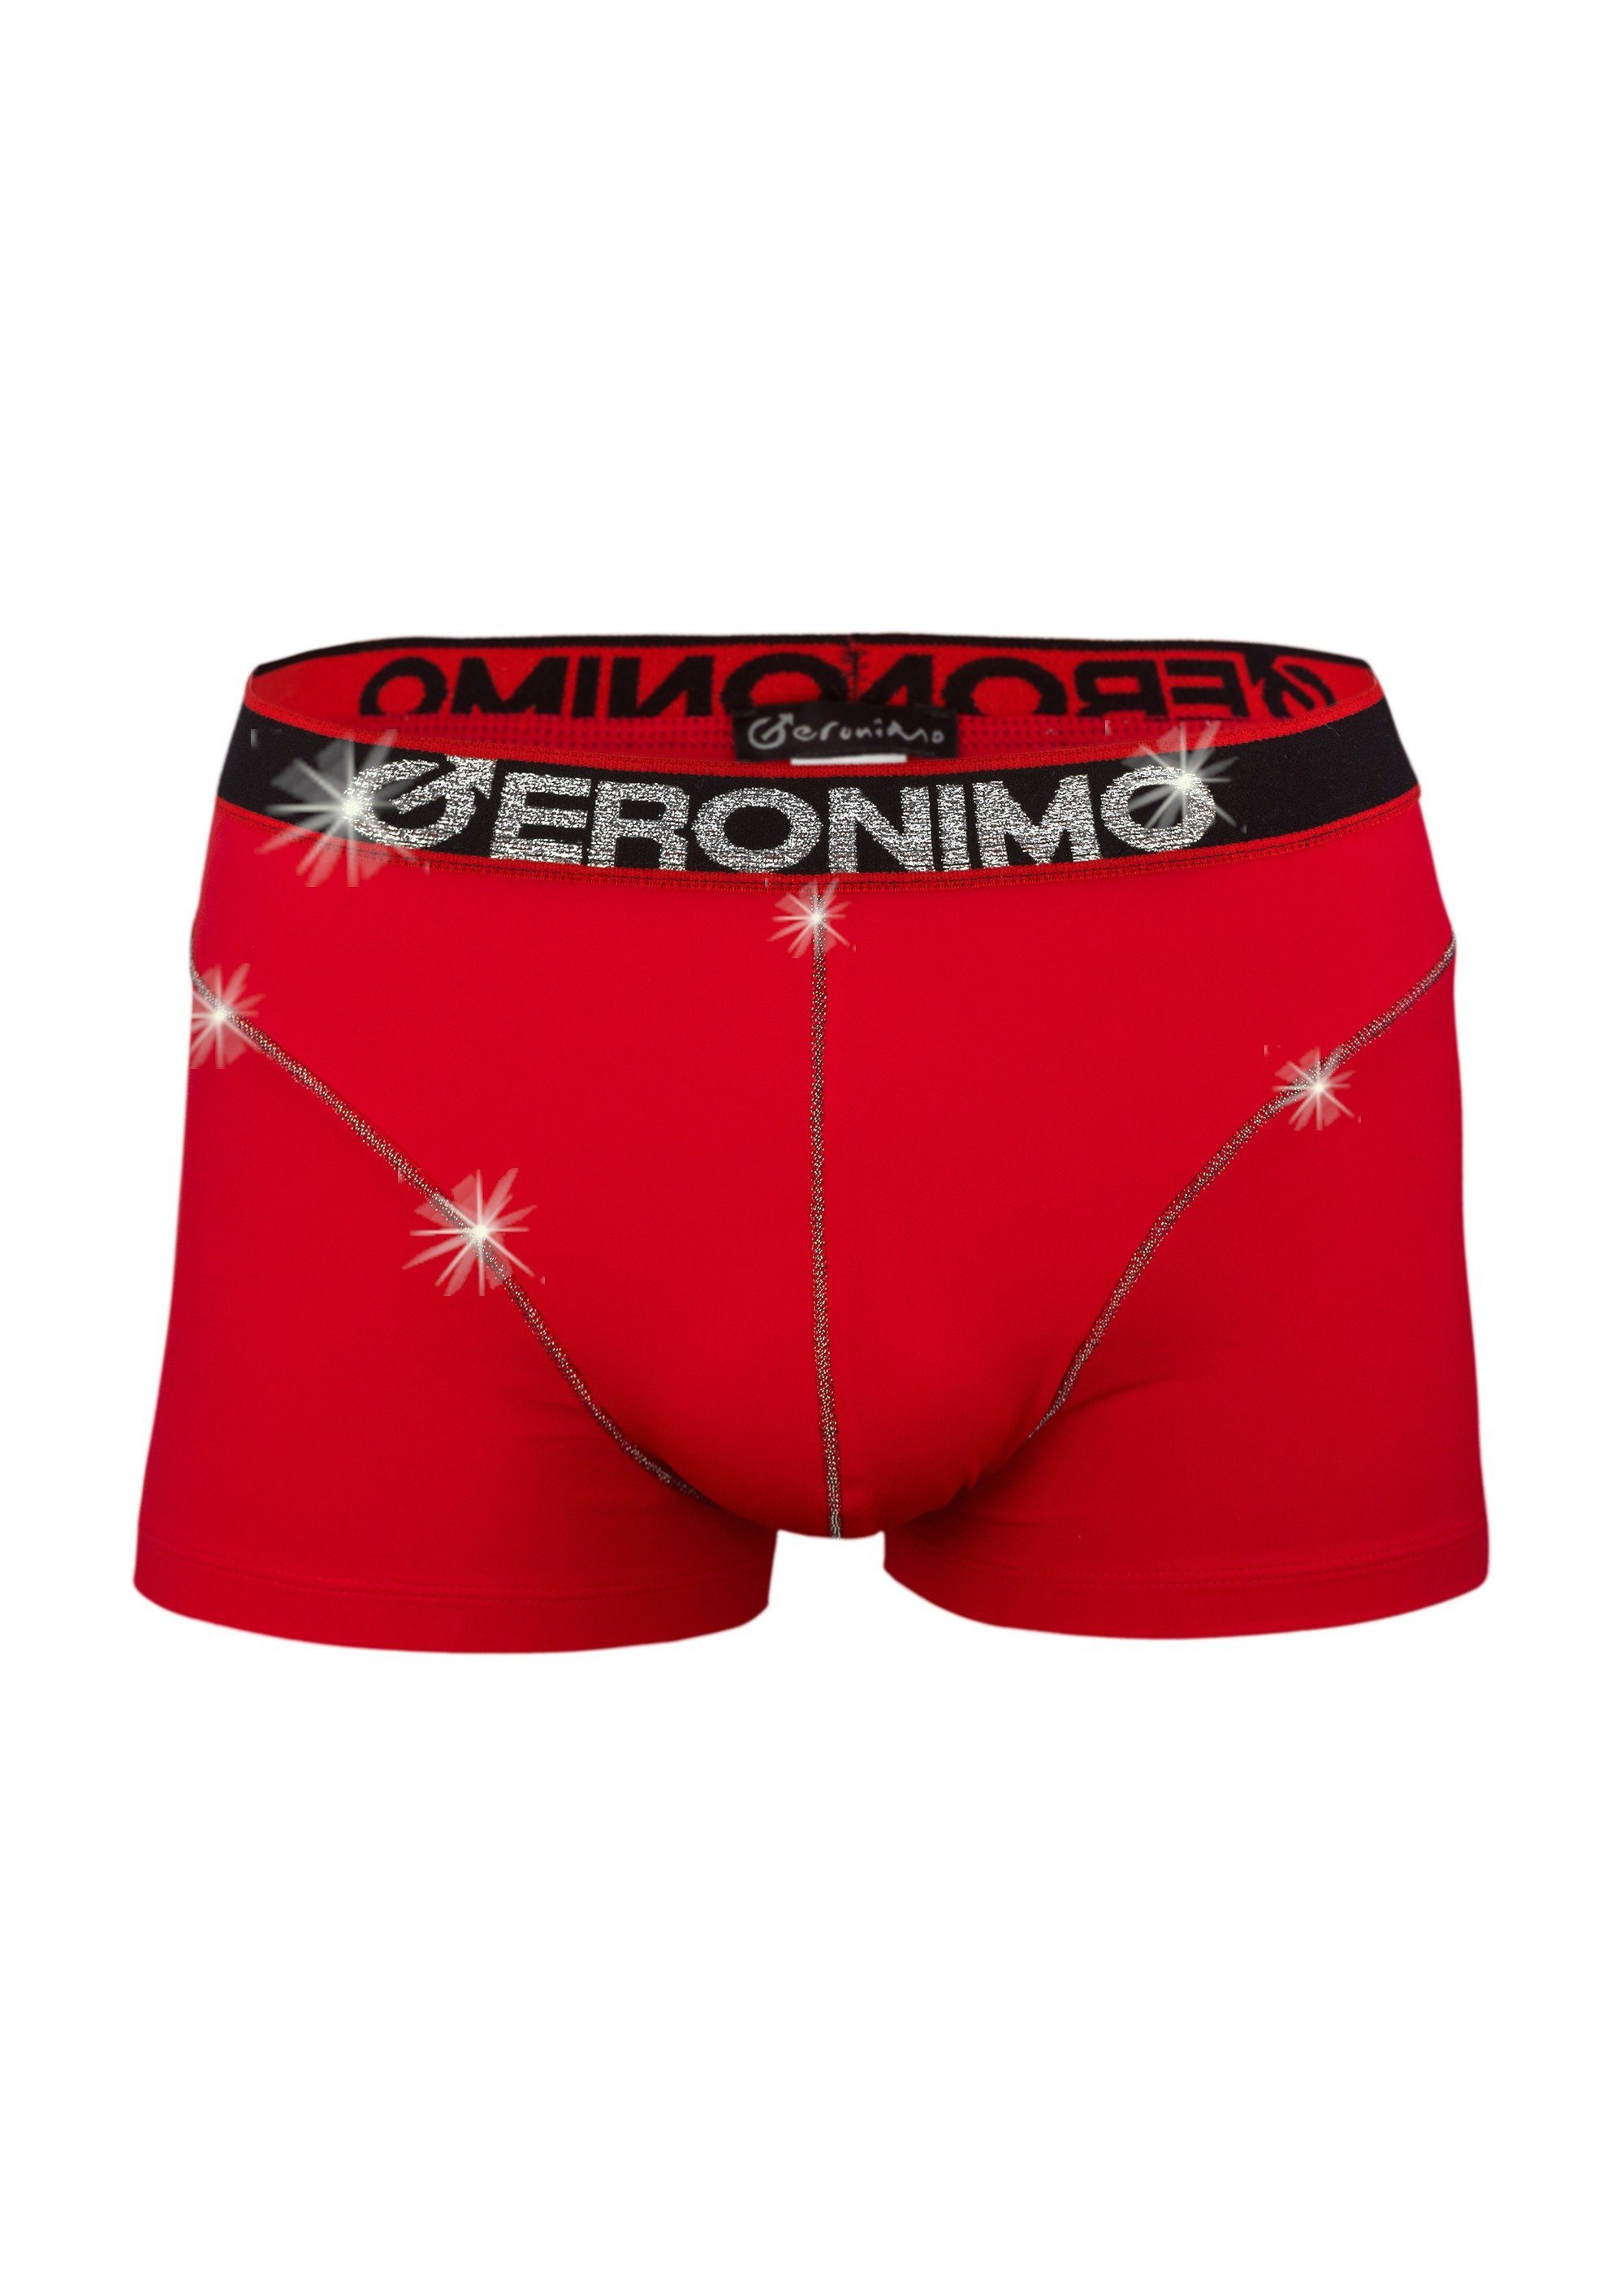 Erotic 1-St) Boxer Red Line (Boxer, erotisch Boxershorts Geronimo G-Plus